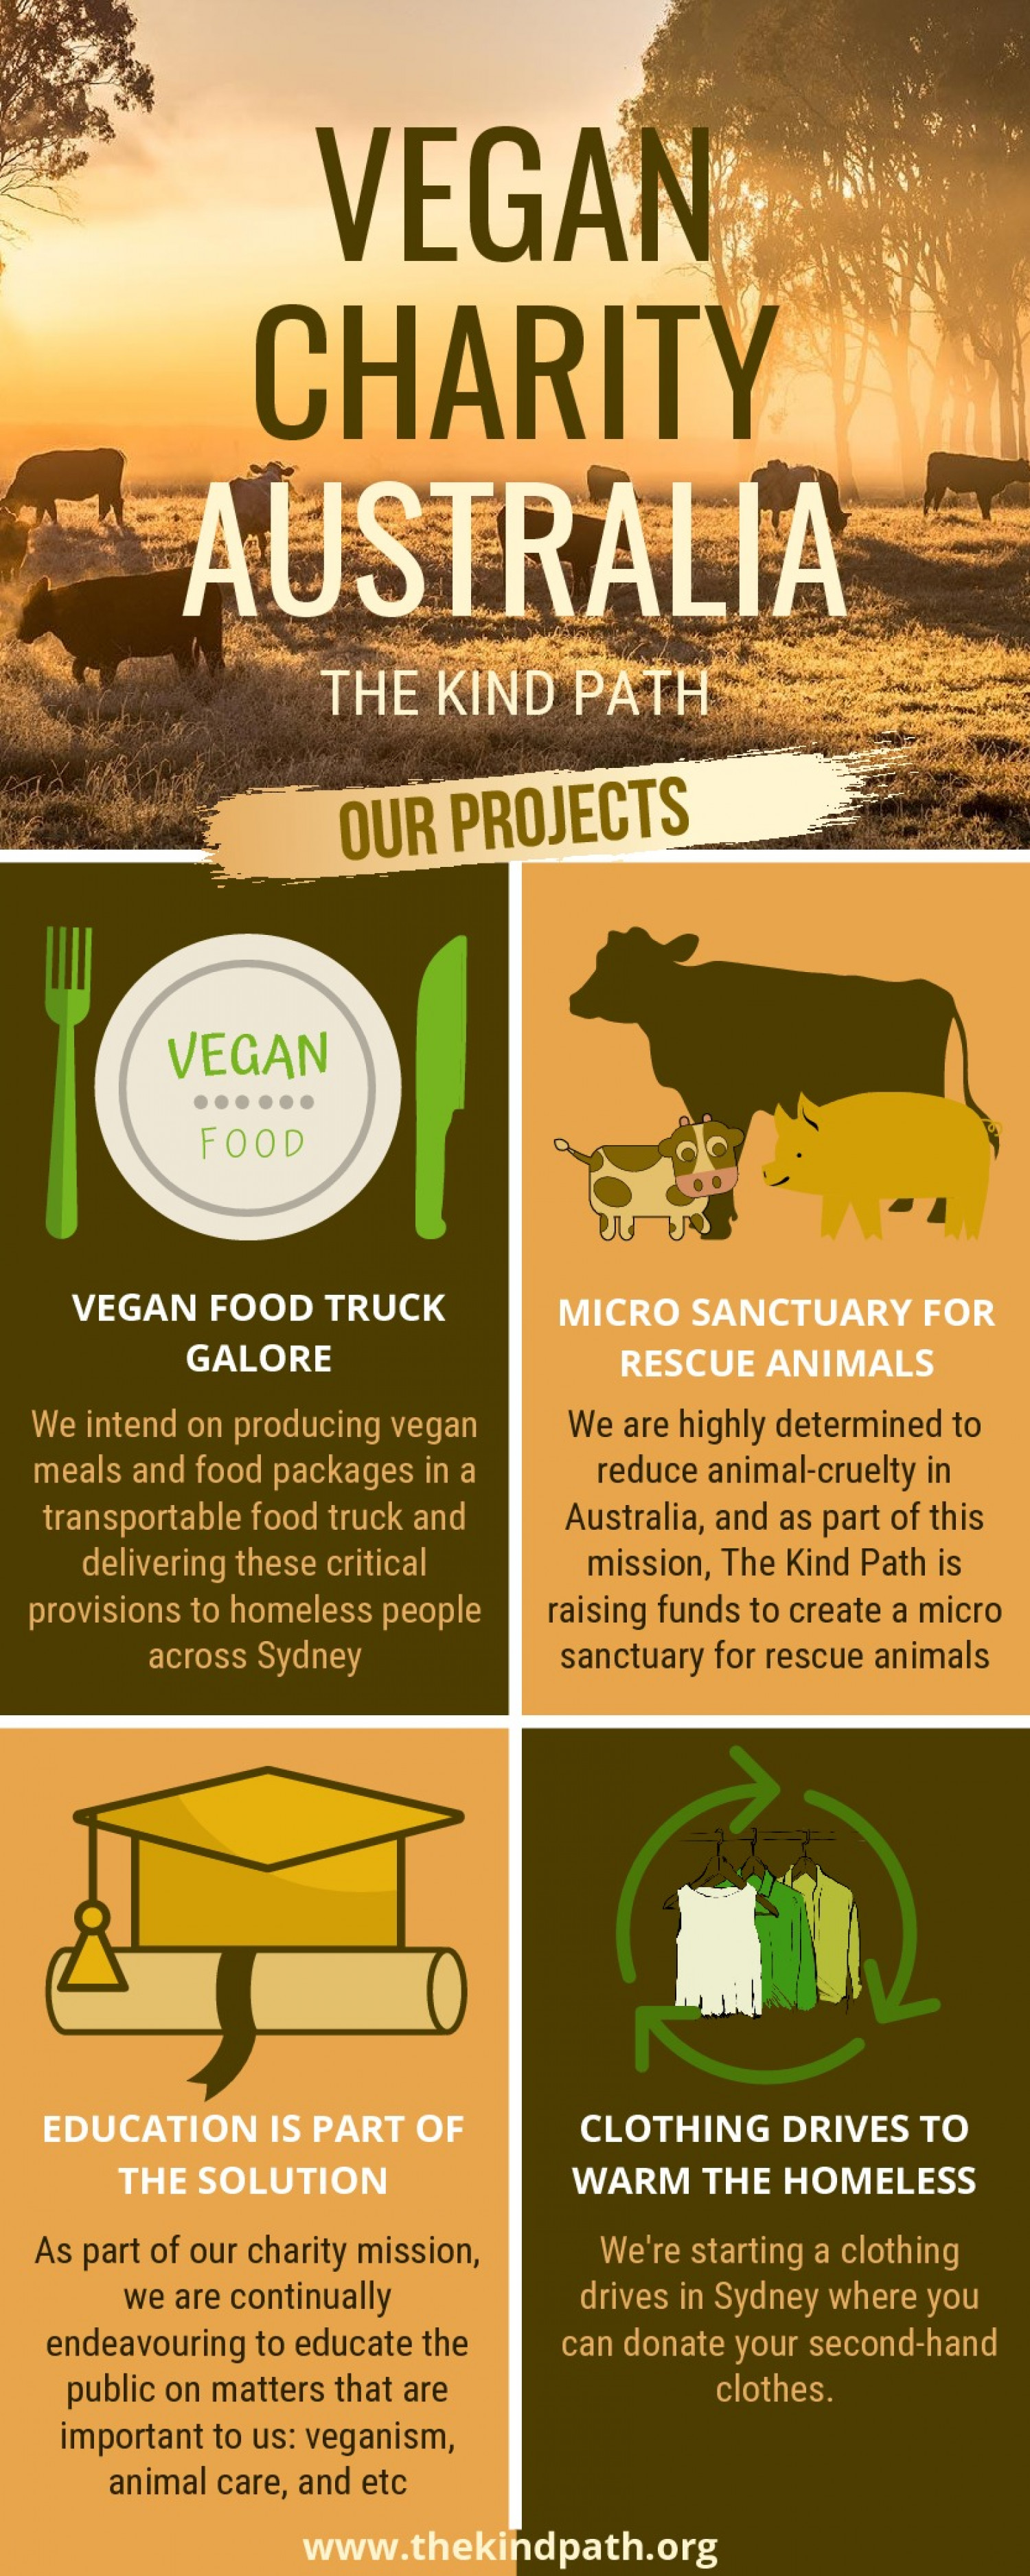 Vegan Charity Australia - THE KIND PATH Infographic